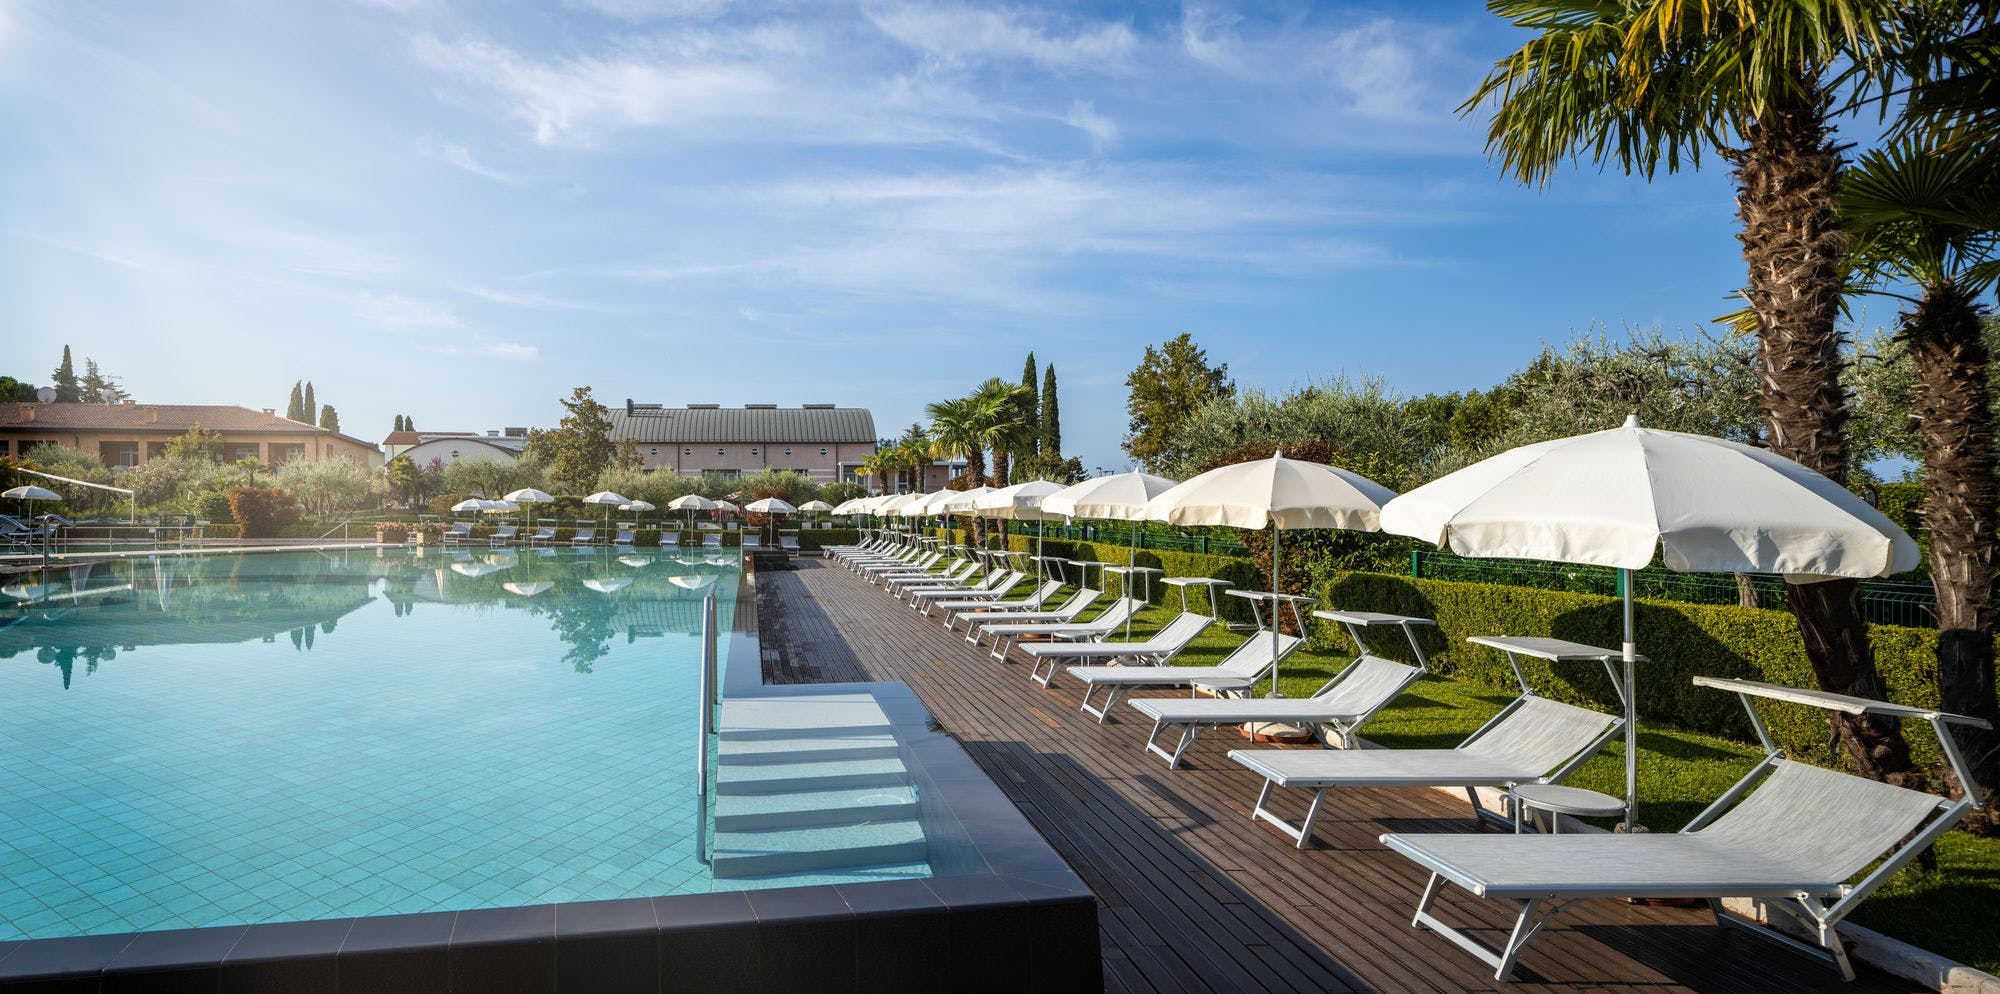 Swimming pool-umbrellas-sun-blue sky-hotel